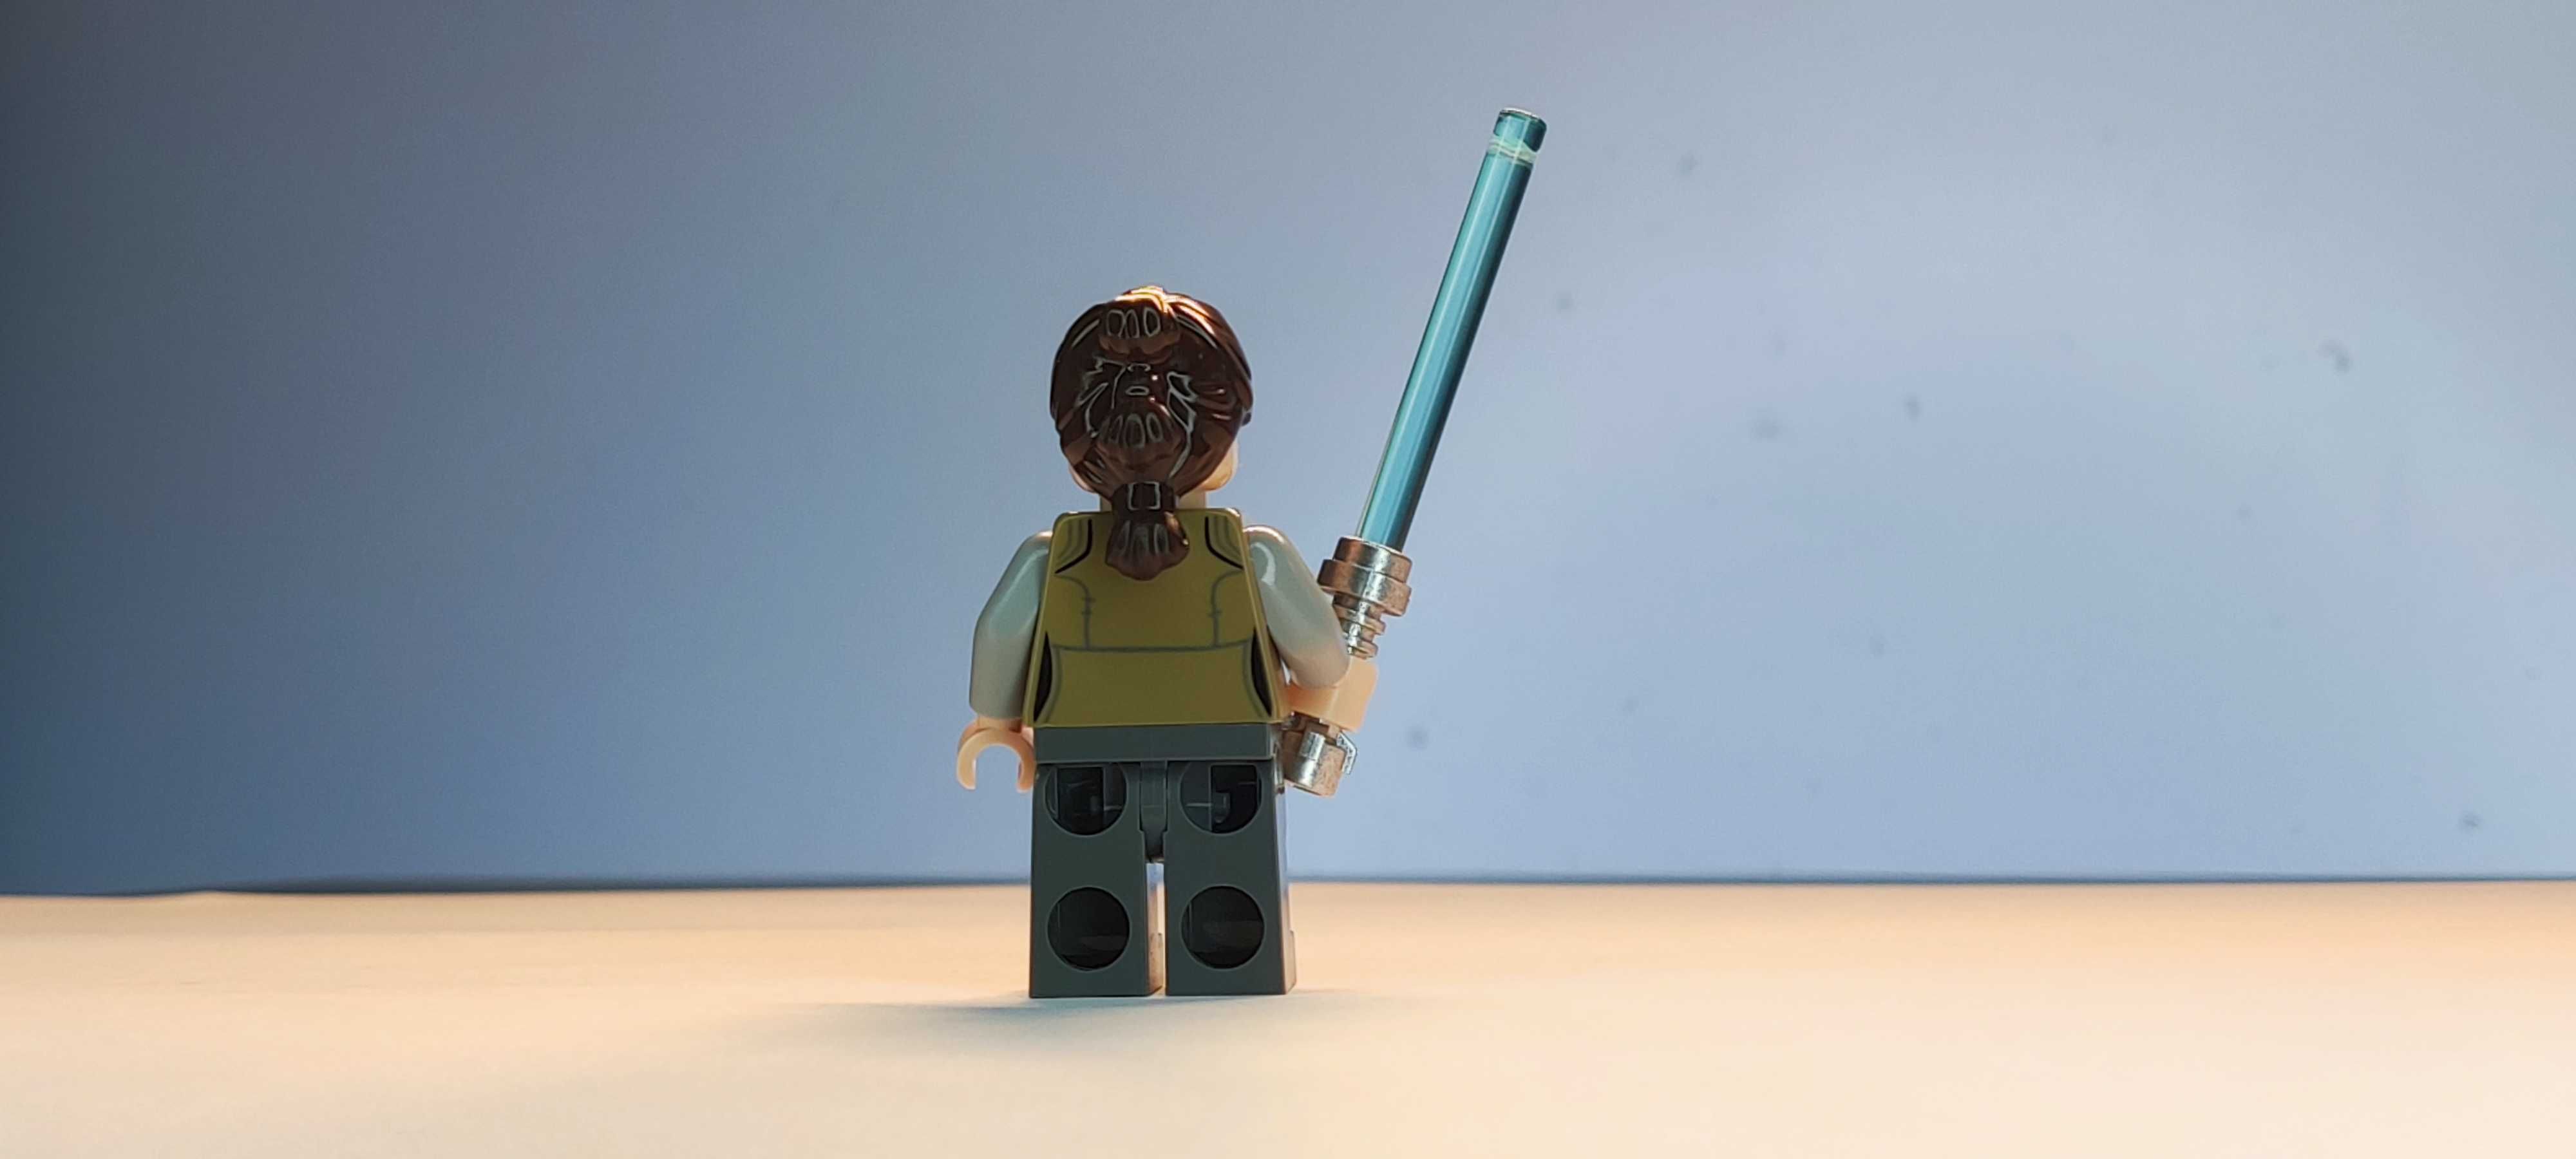 Minifigura Lego - Star Wars: Os Últimos Jedi: Rey Skywalker